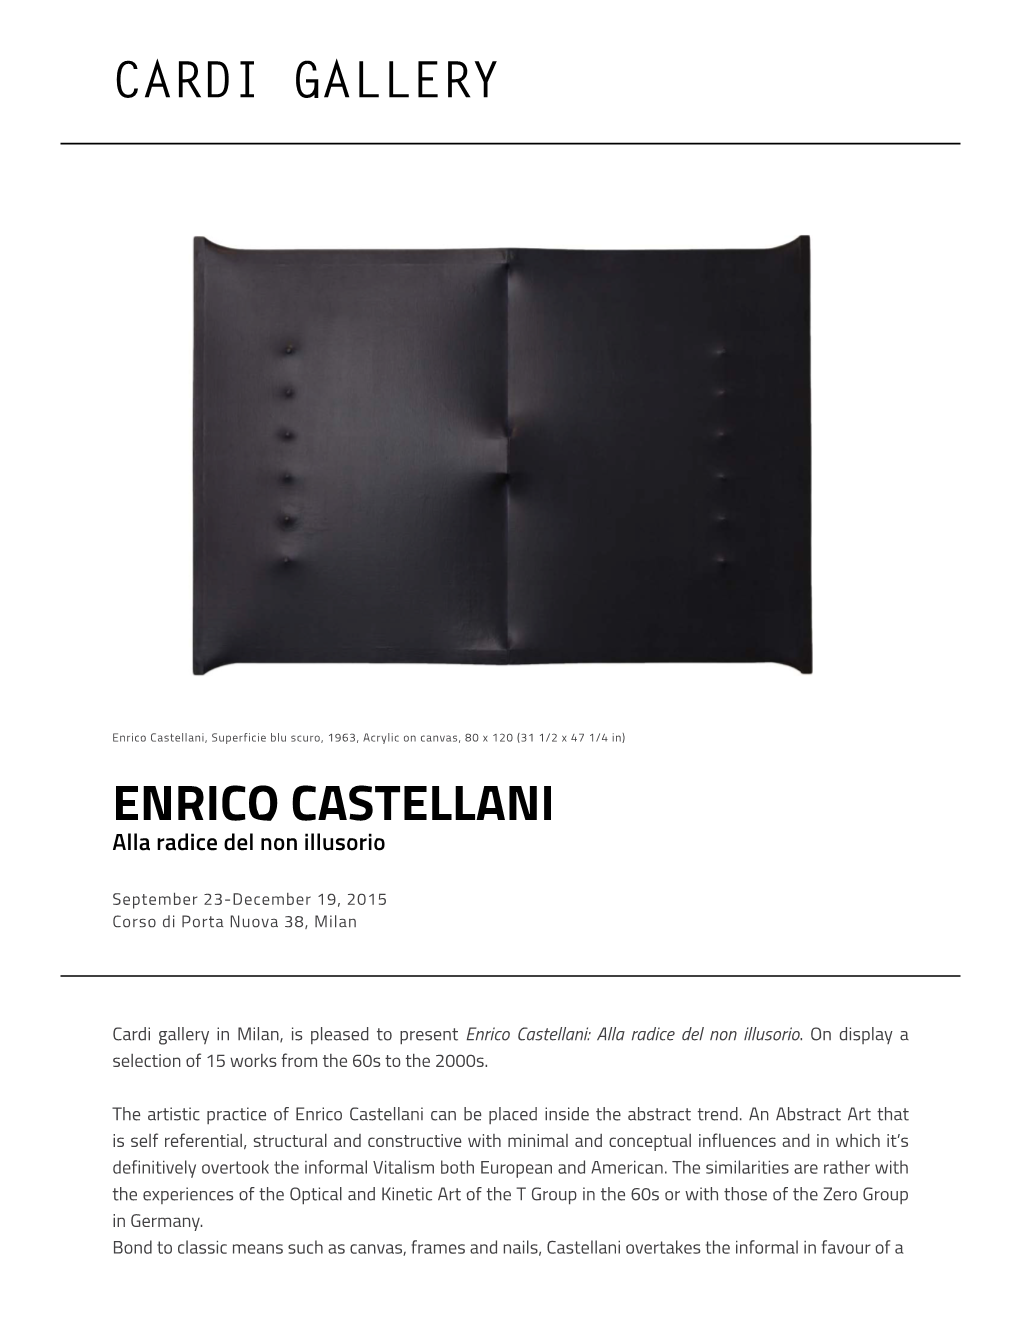 Cardi Gallery Enrico Castellani